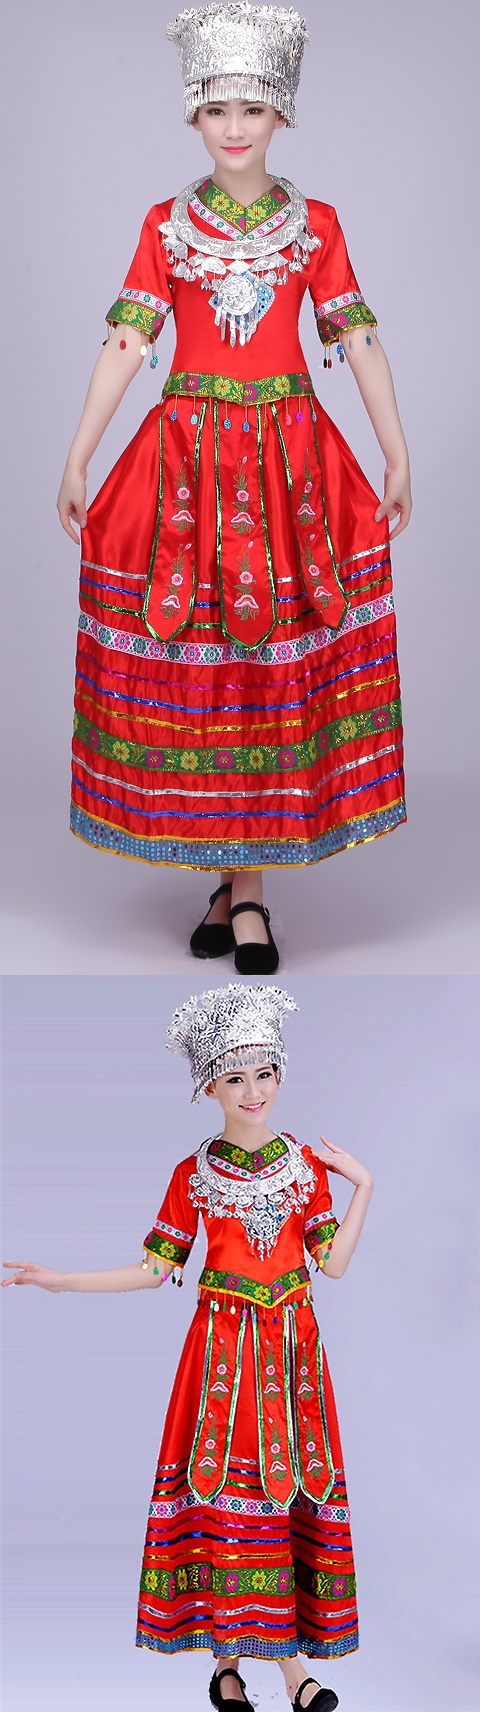 Chinese Ethnic Dancing Costume - Miao Zu